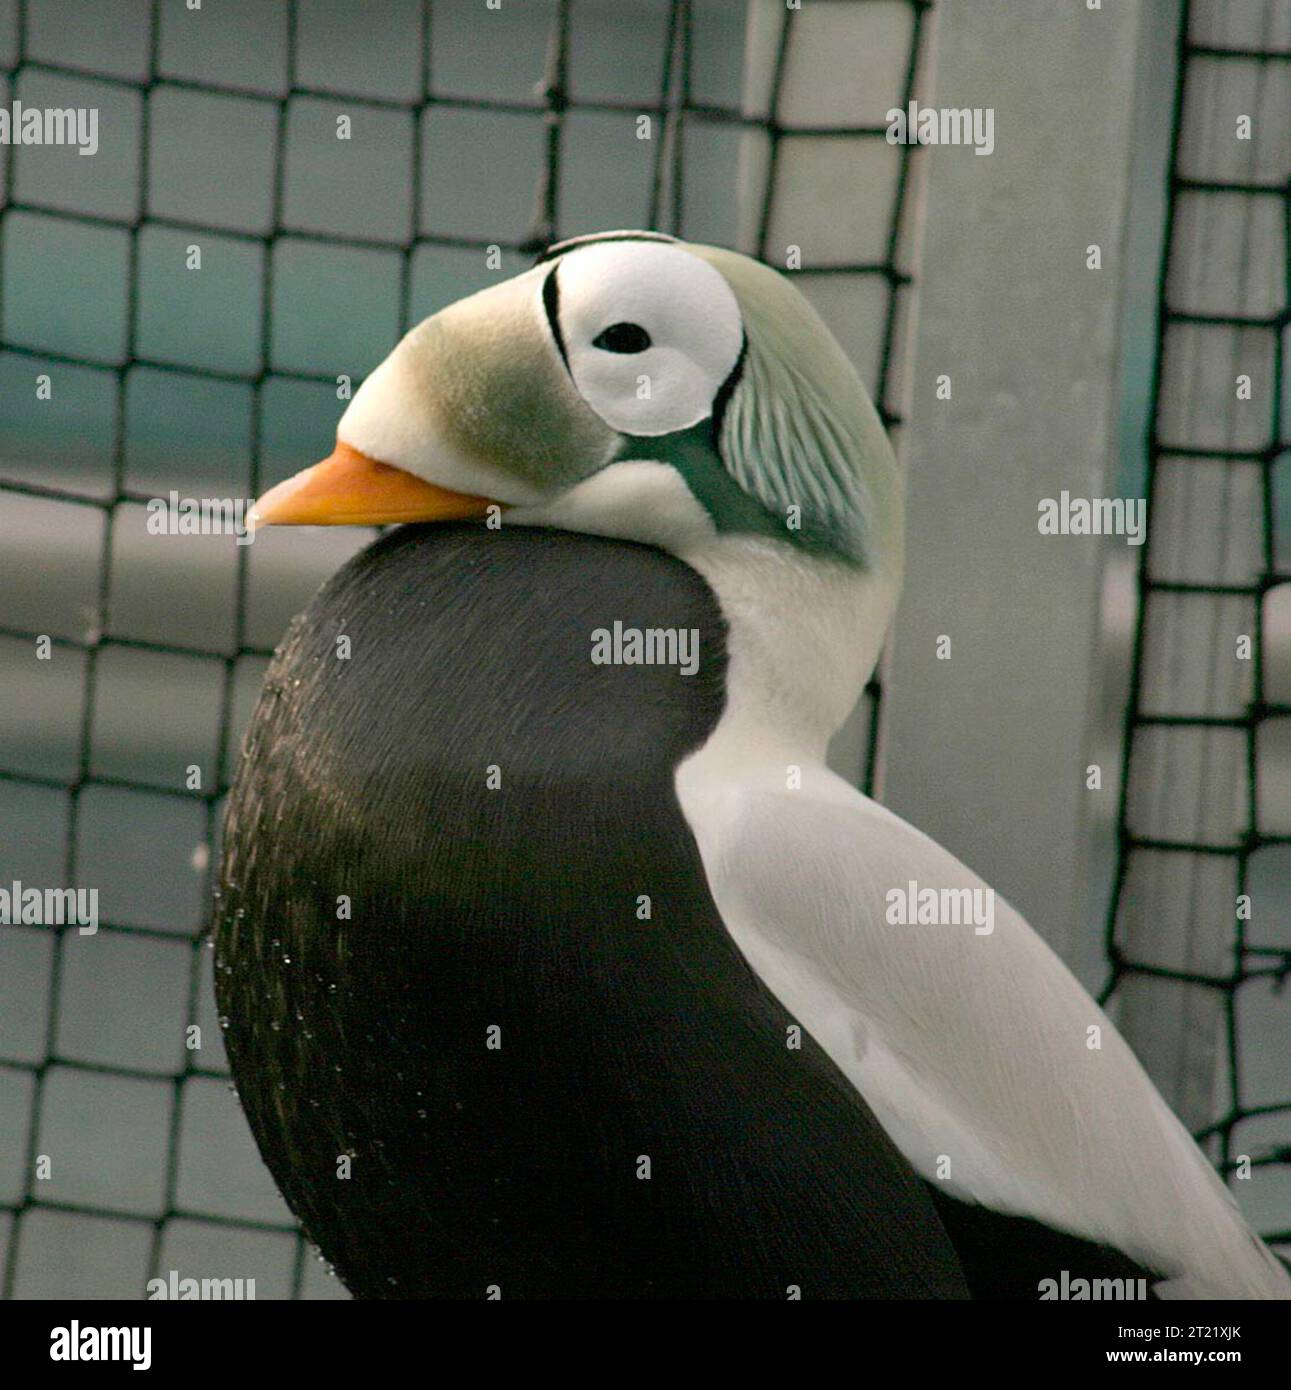 Image taken at the Alaska SeaLife Center, Seward, Alaska. Subjects: Birds; Waterfowl; Sea Ducks; Alaska. Stock Photo